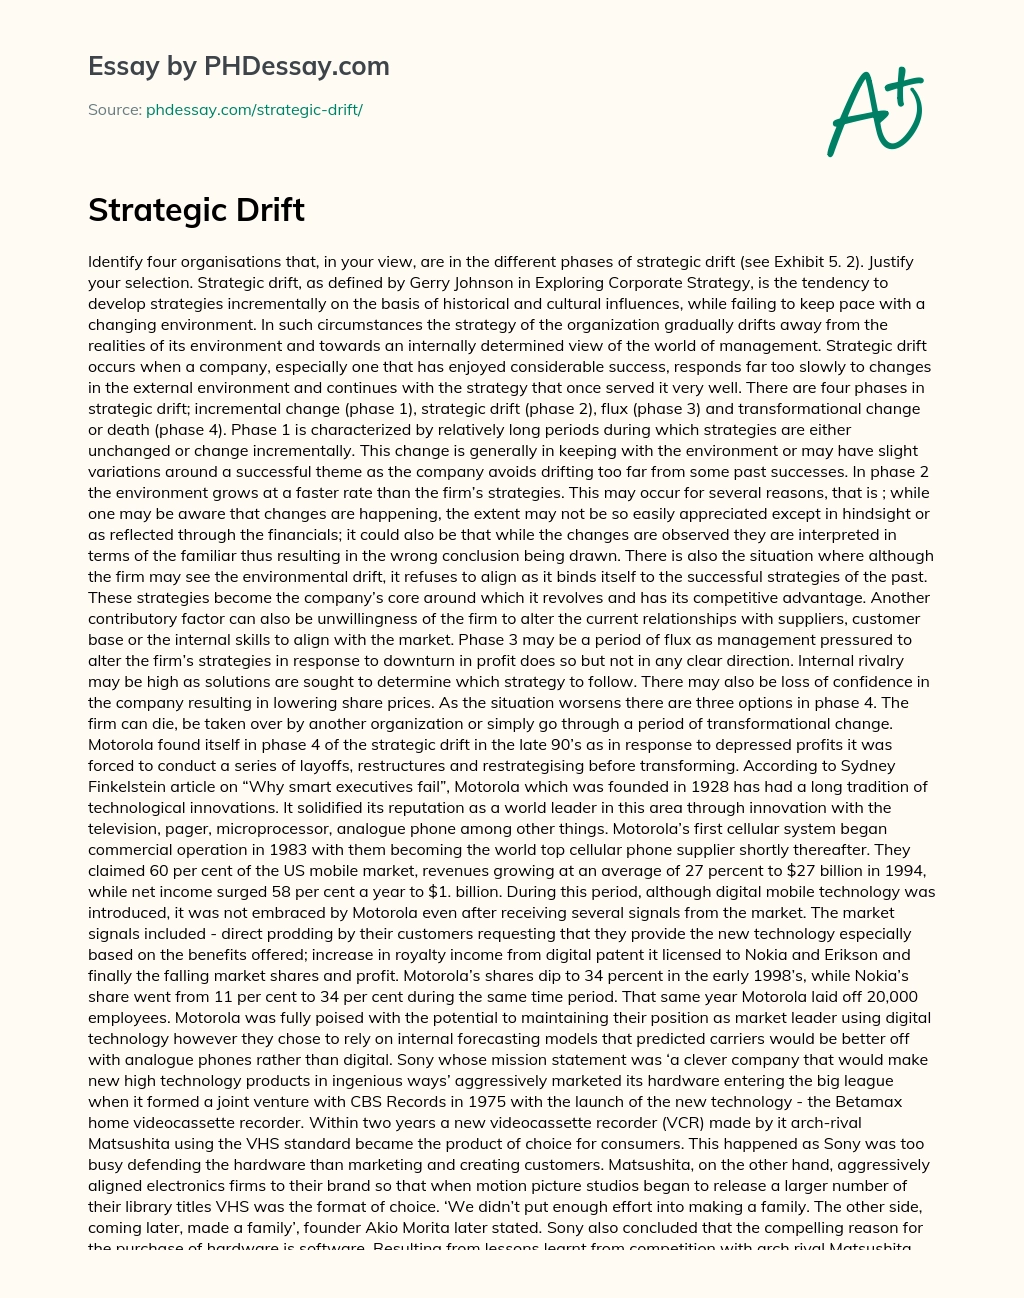 Strategic Drift essay